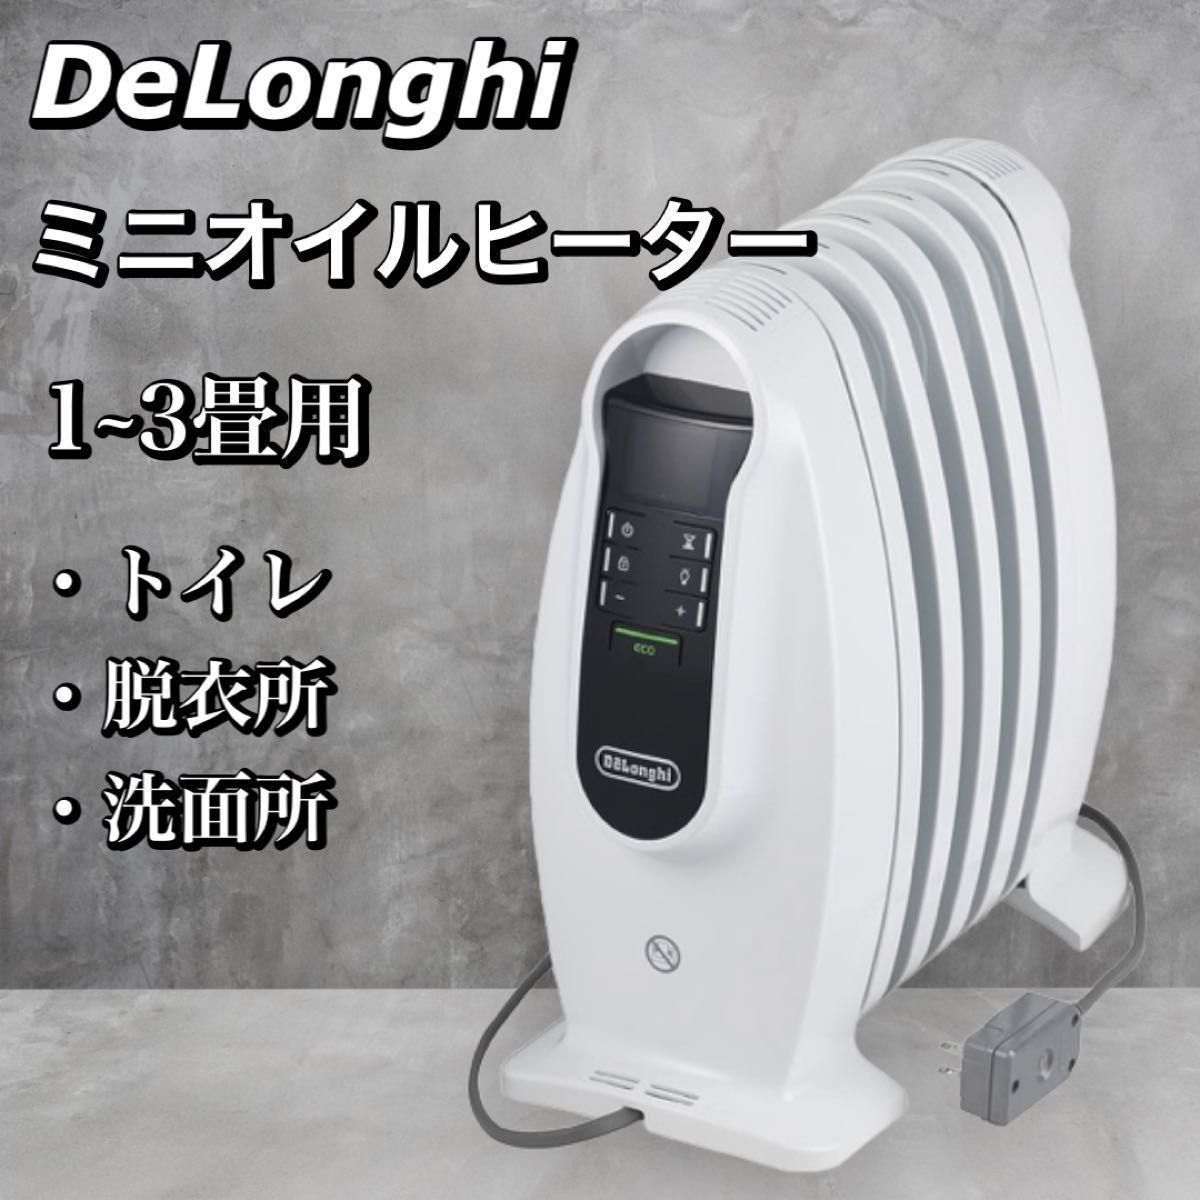 DeLonghi デロンギ ミニオイルヒーター NJ0505E (保証書付) - オイル 